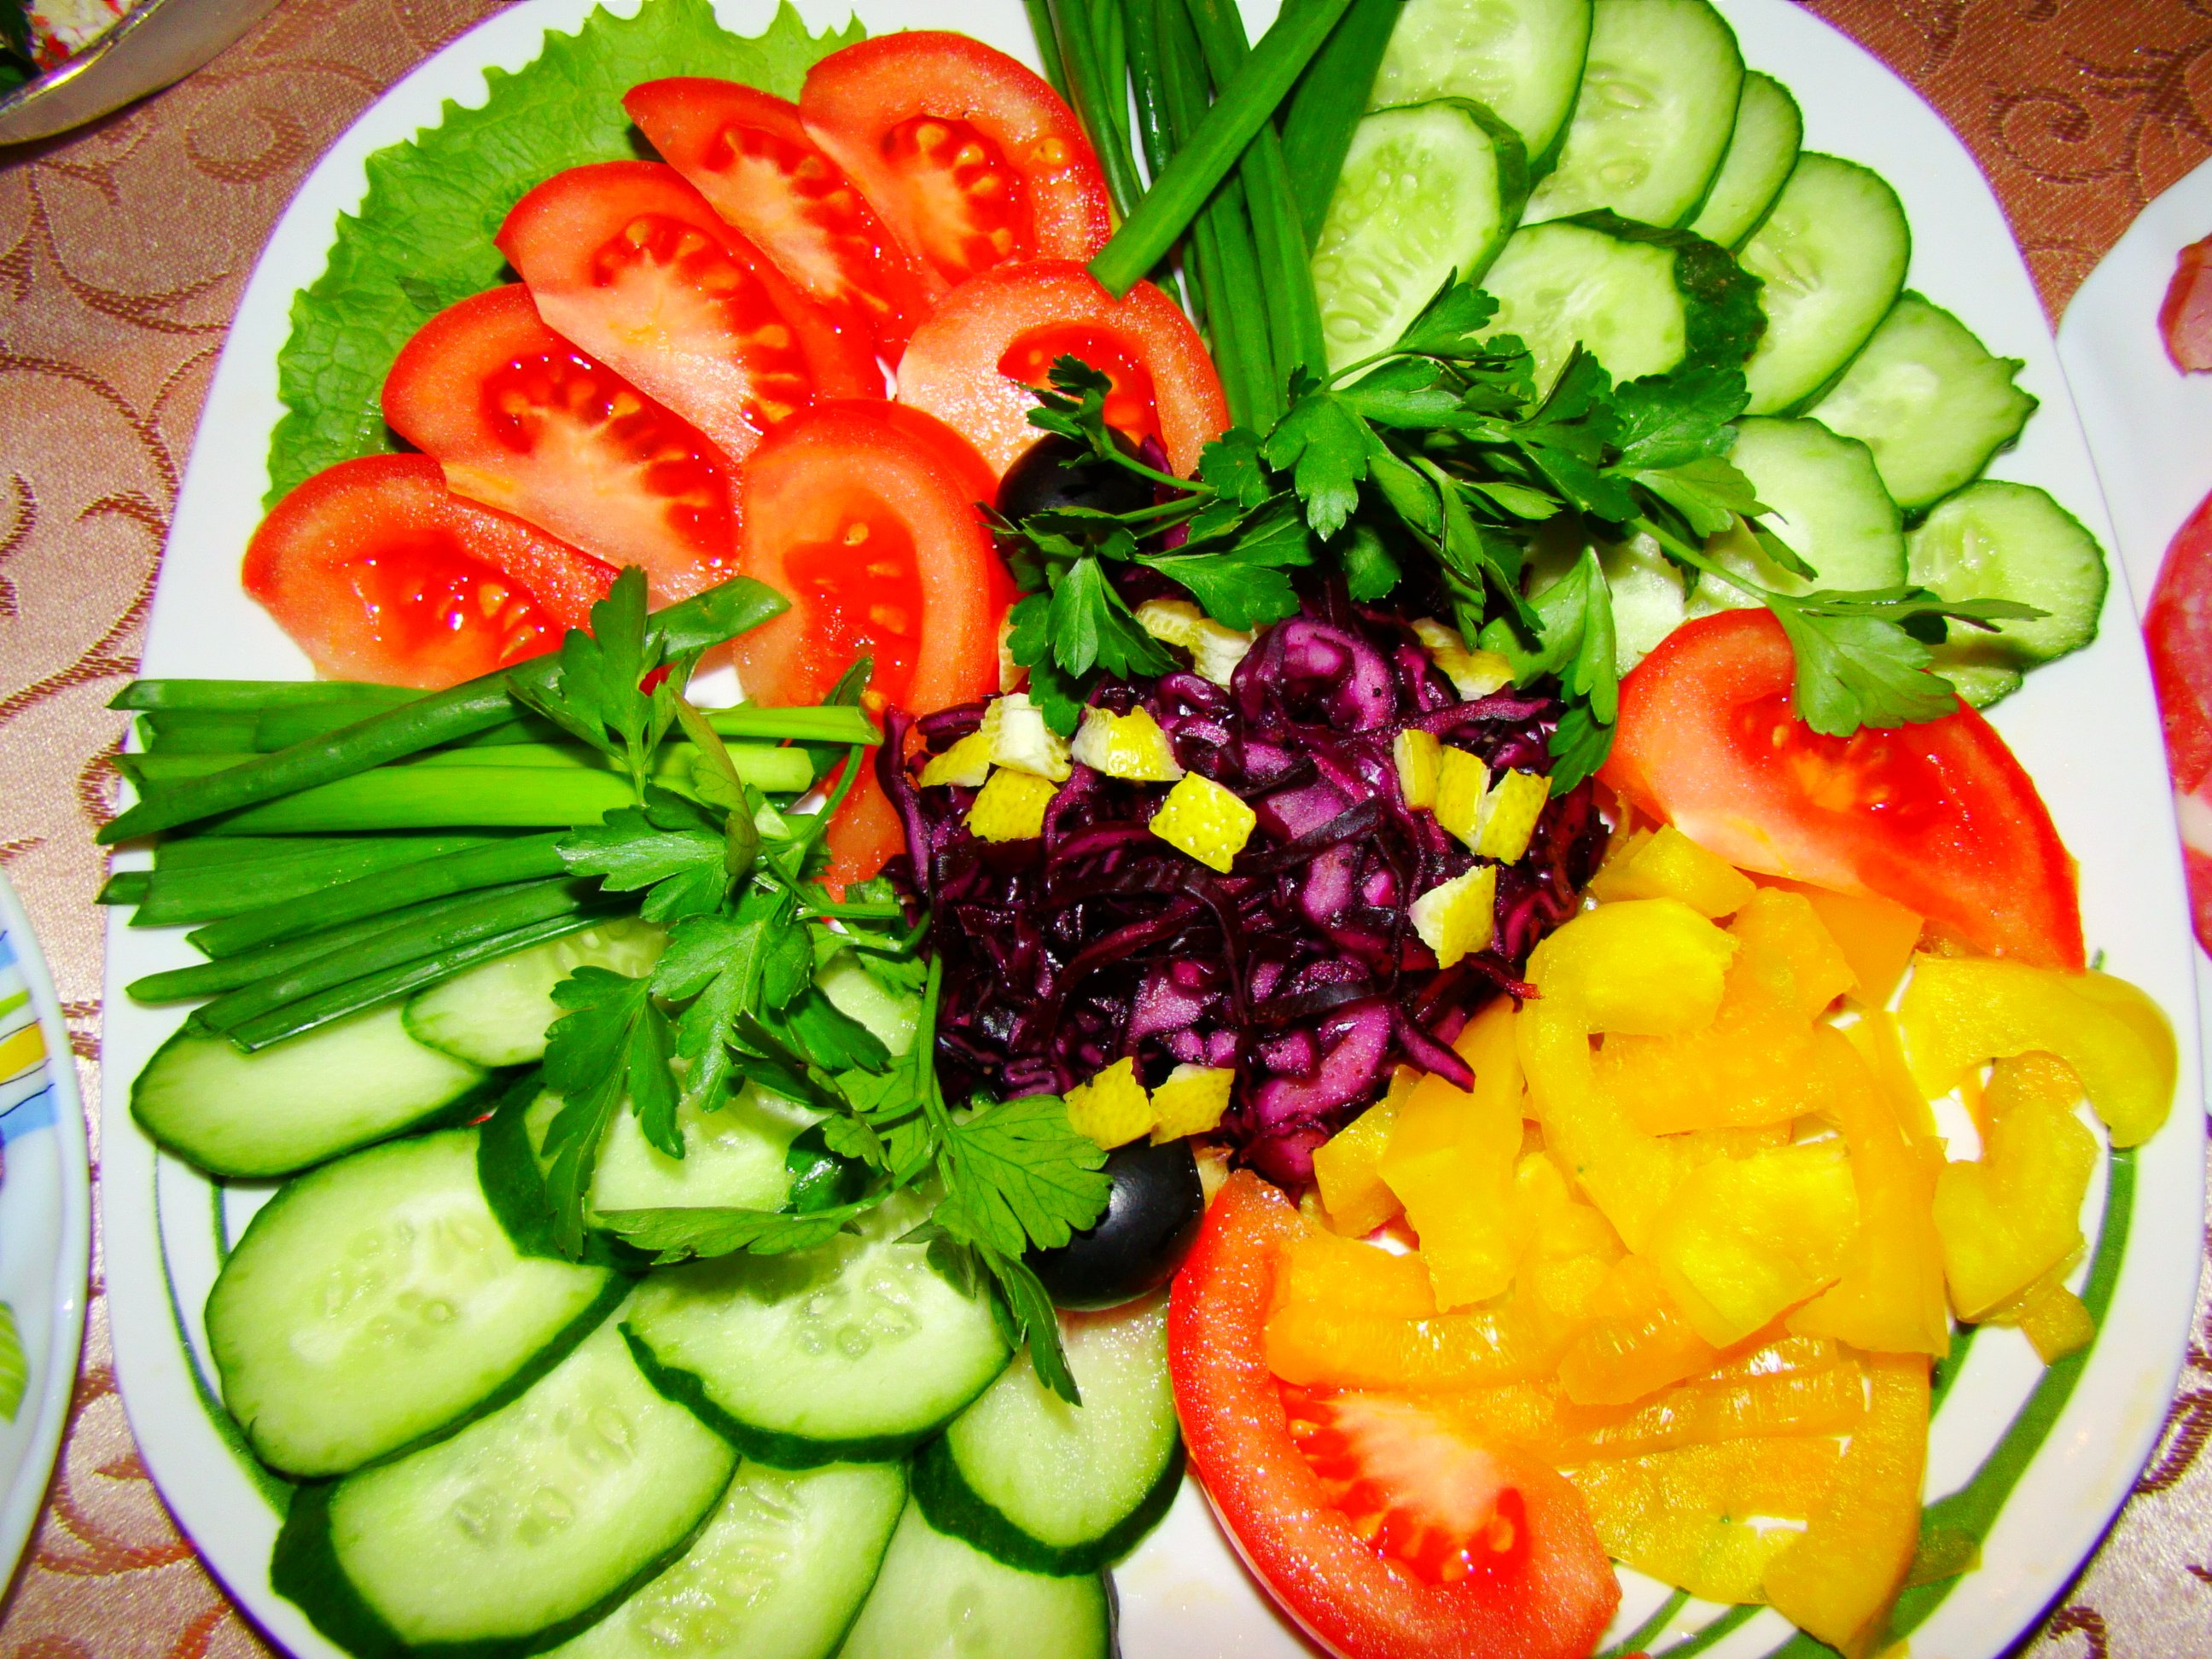 Нарезки огурцов и помидоров на стол. Овощная нарезка. Красивая нарезка овощей на стол. Красивые овощные нарезки. Нарезанные овощи.